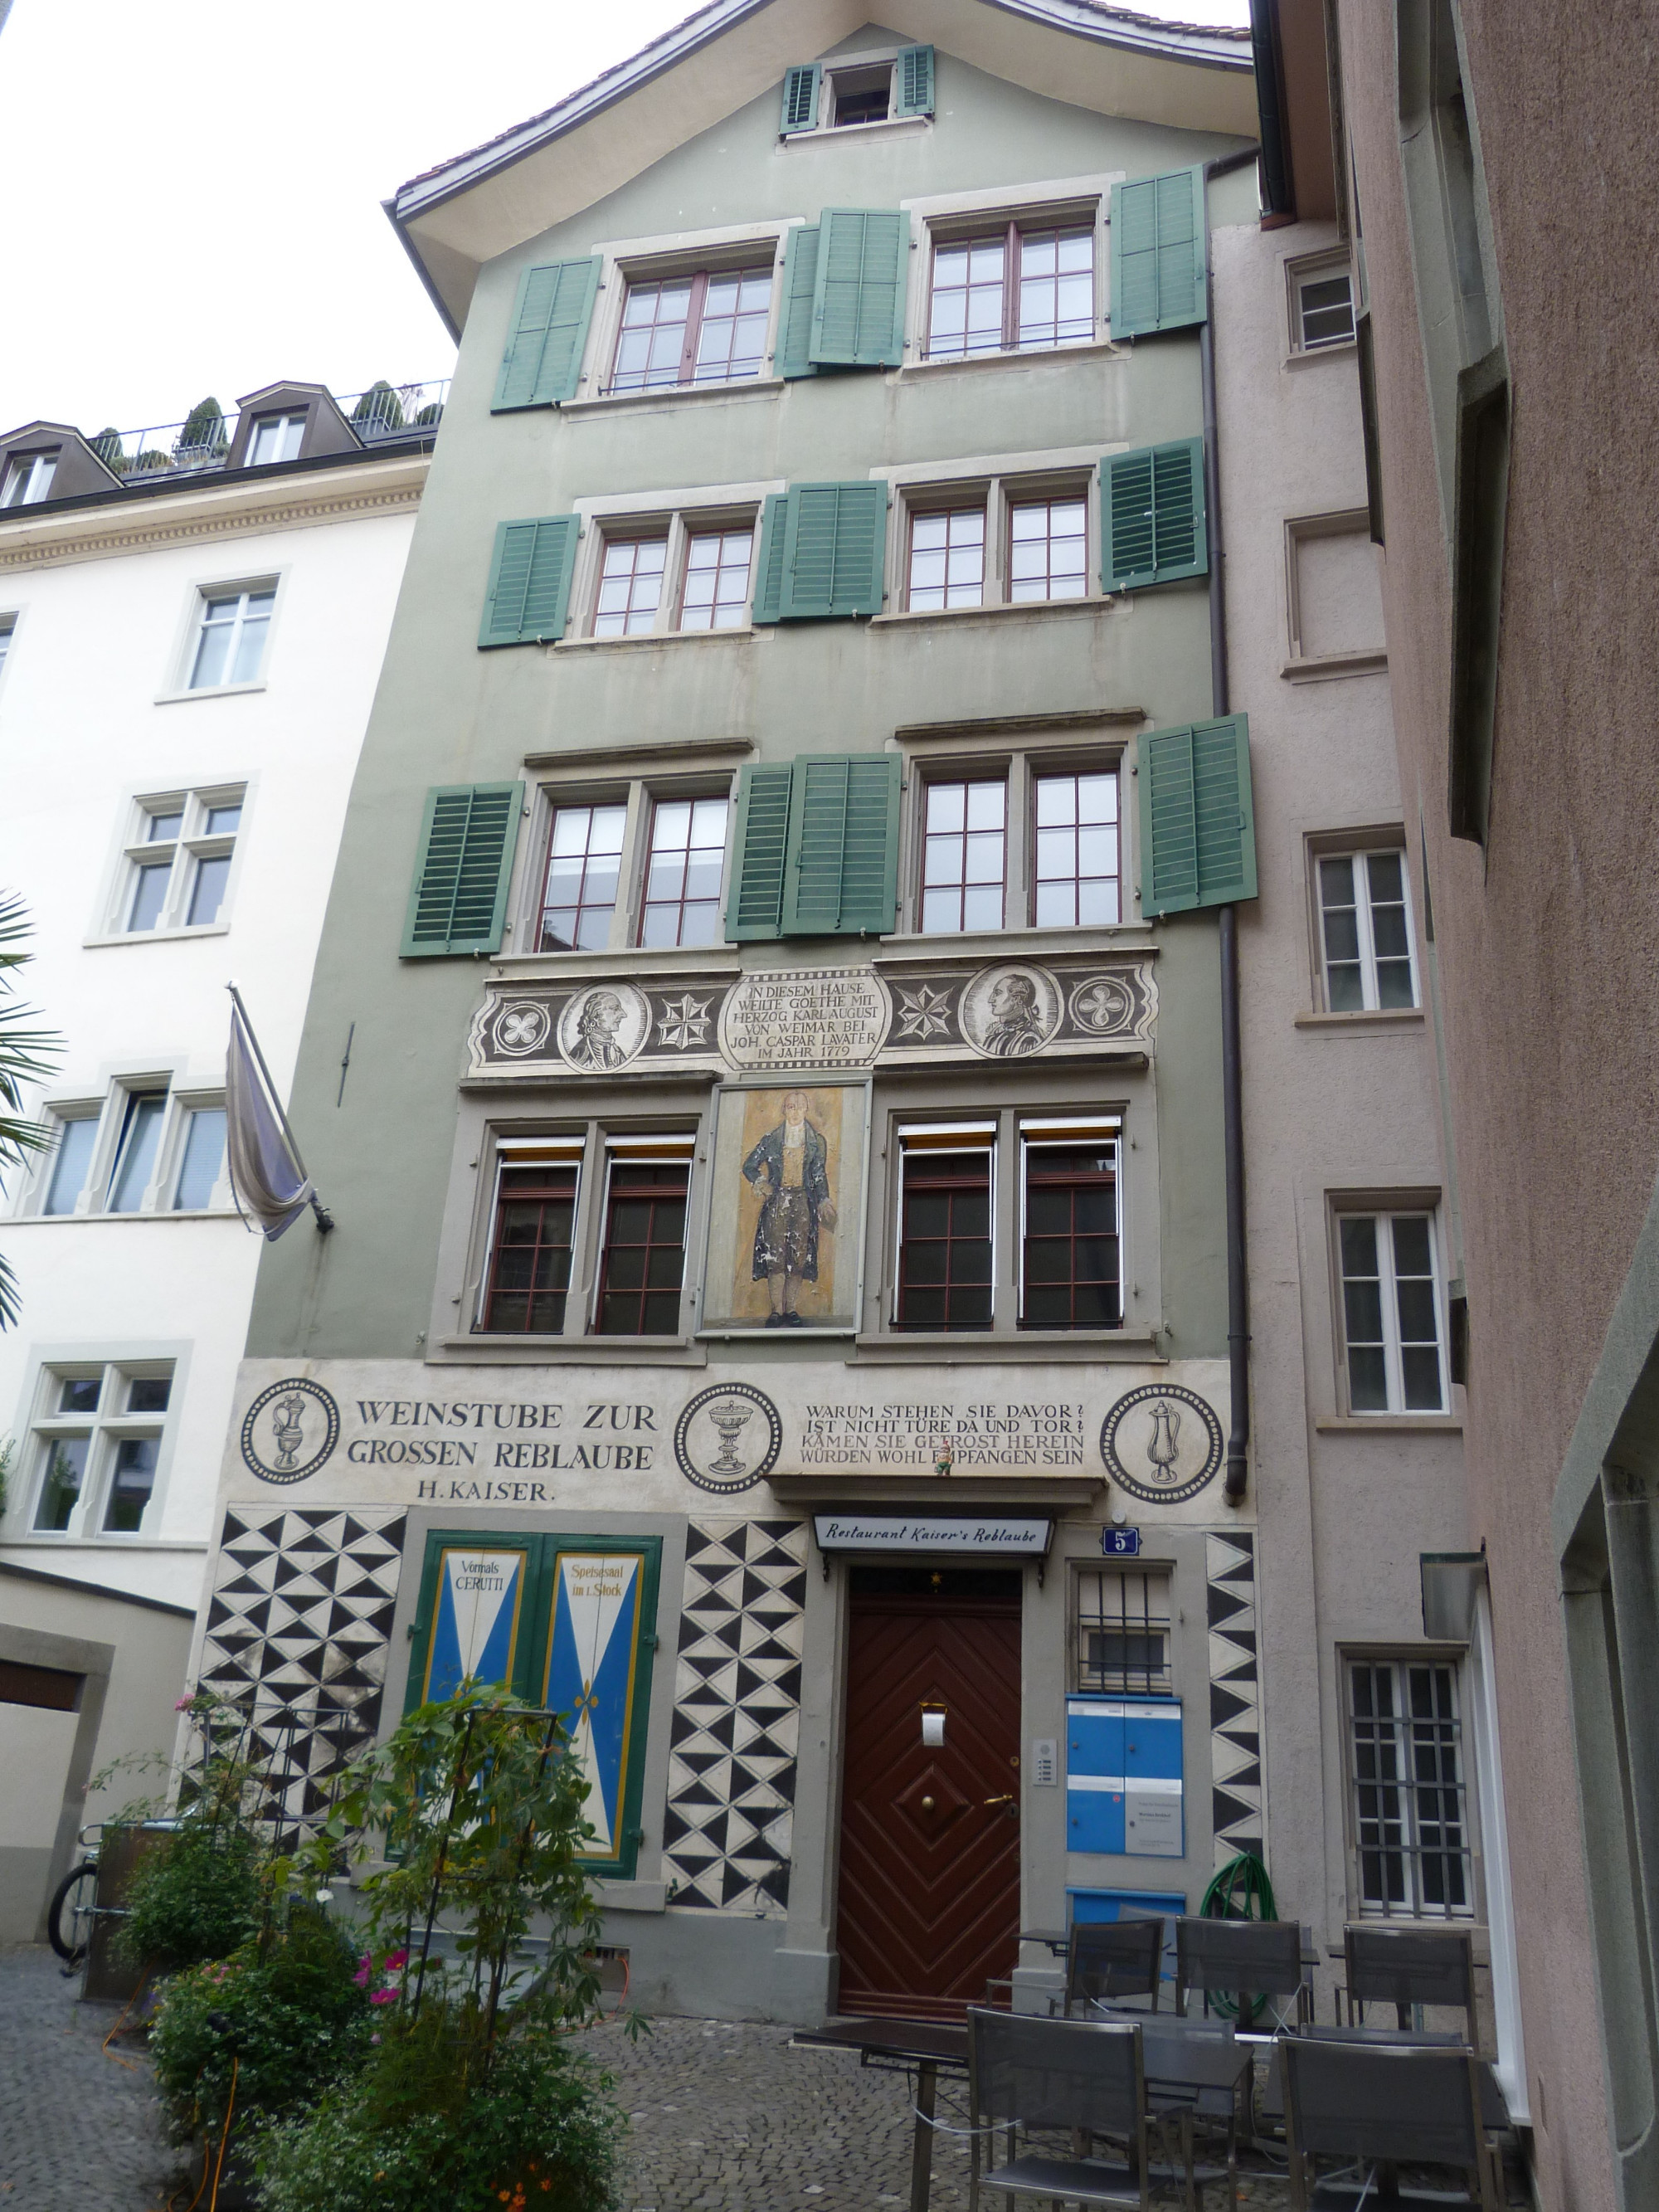 Kaiser's Reblaube building nearby on Glockengasse